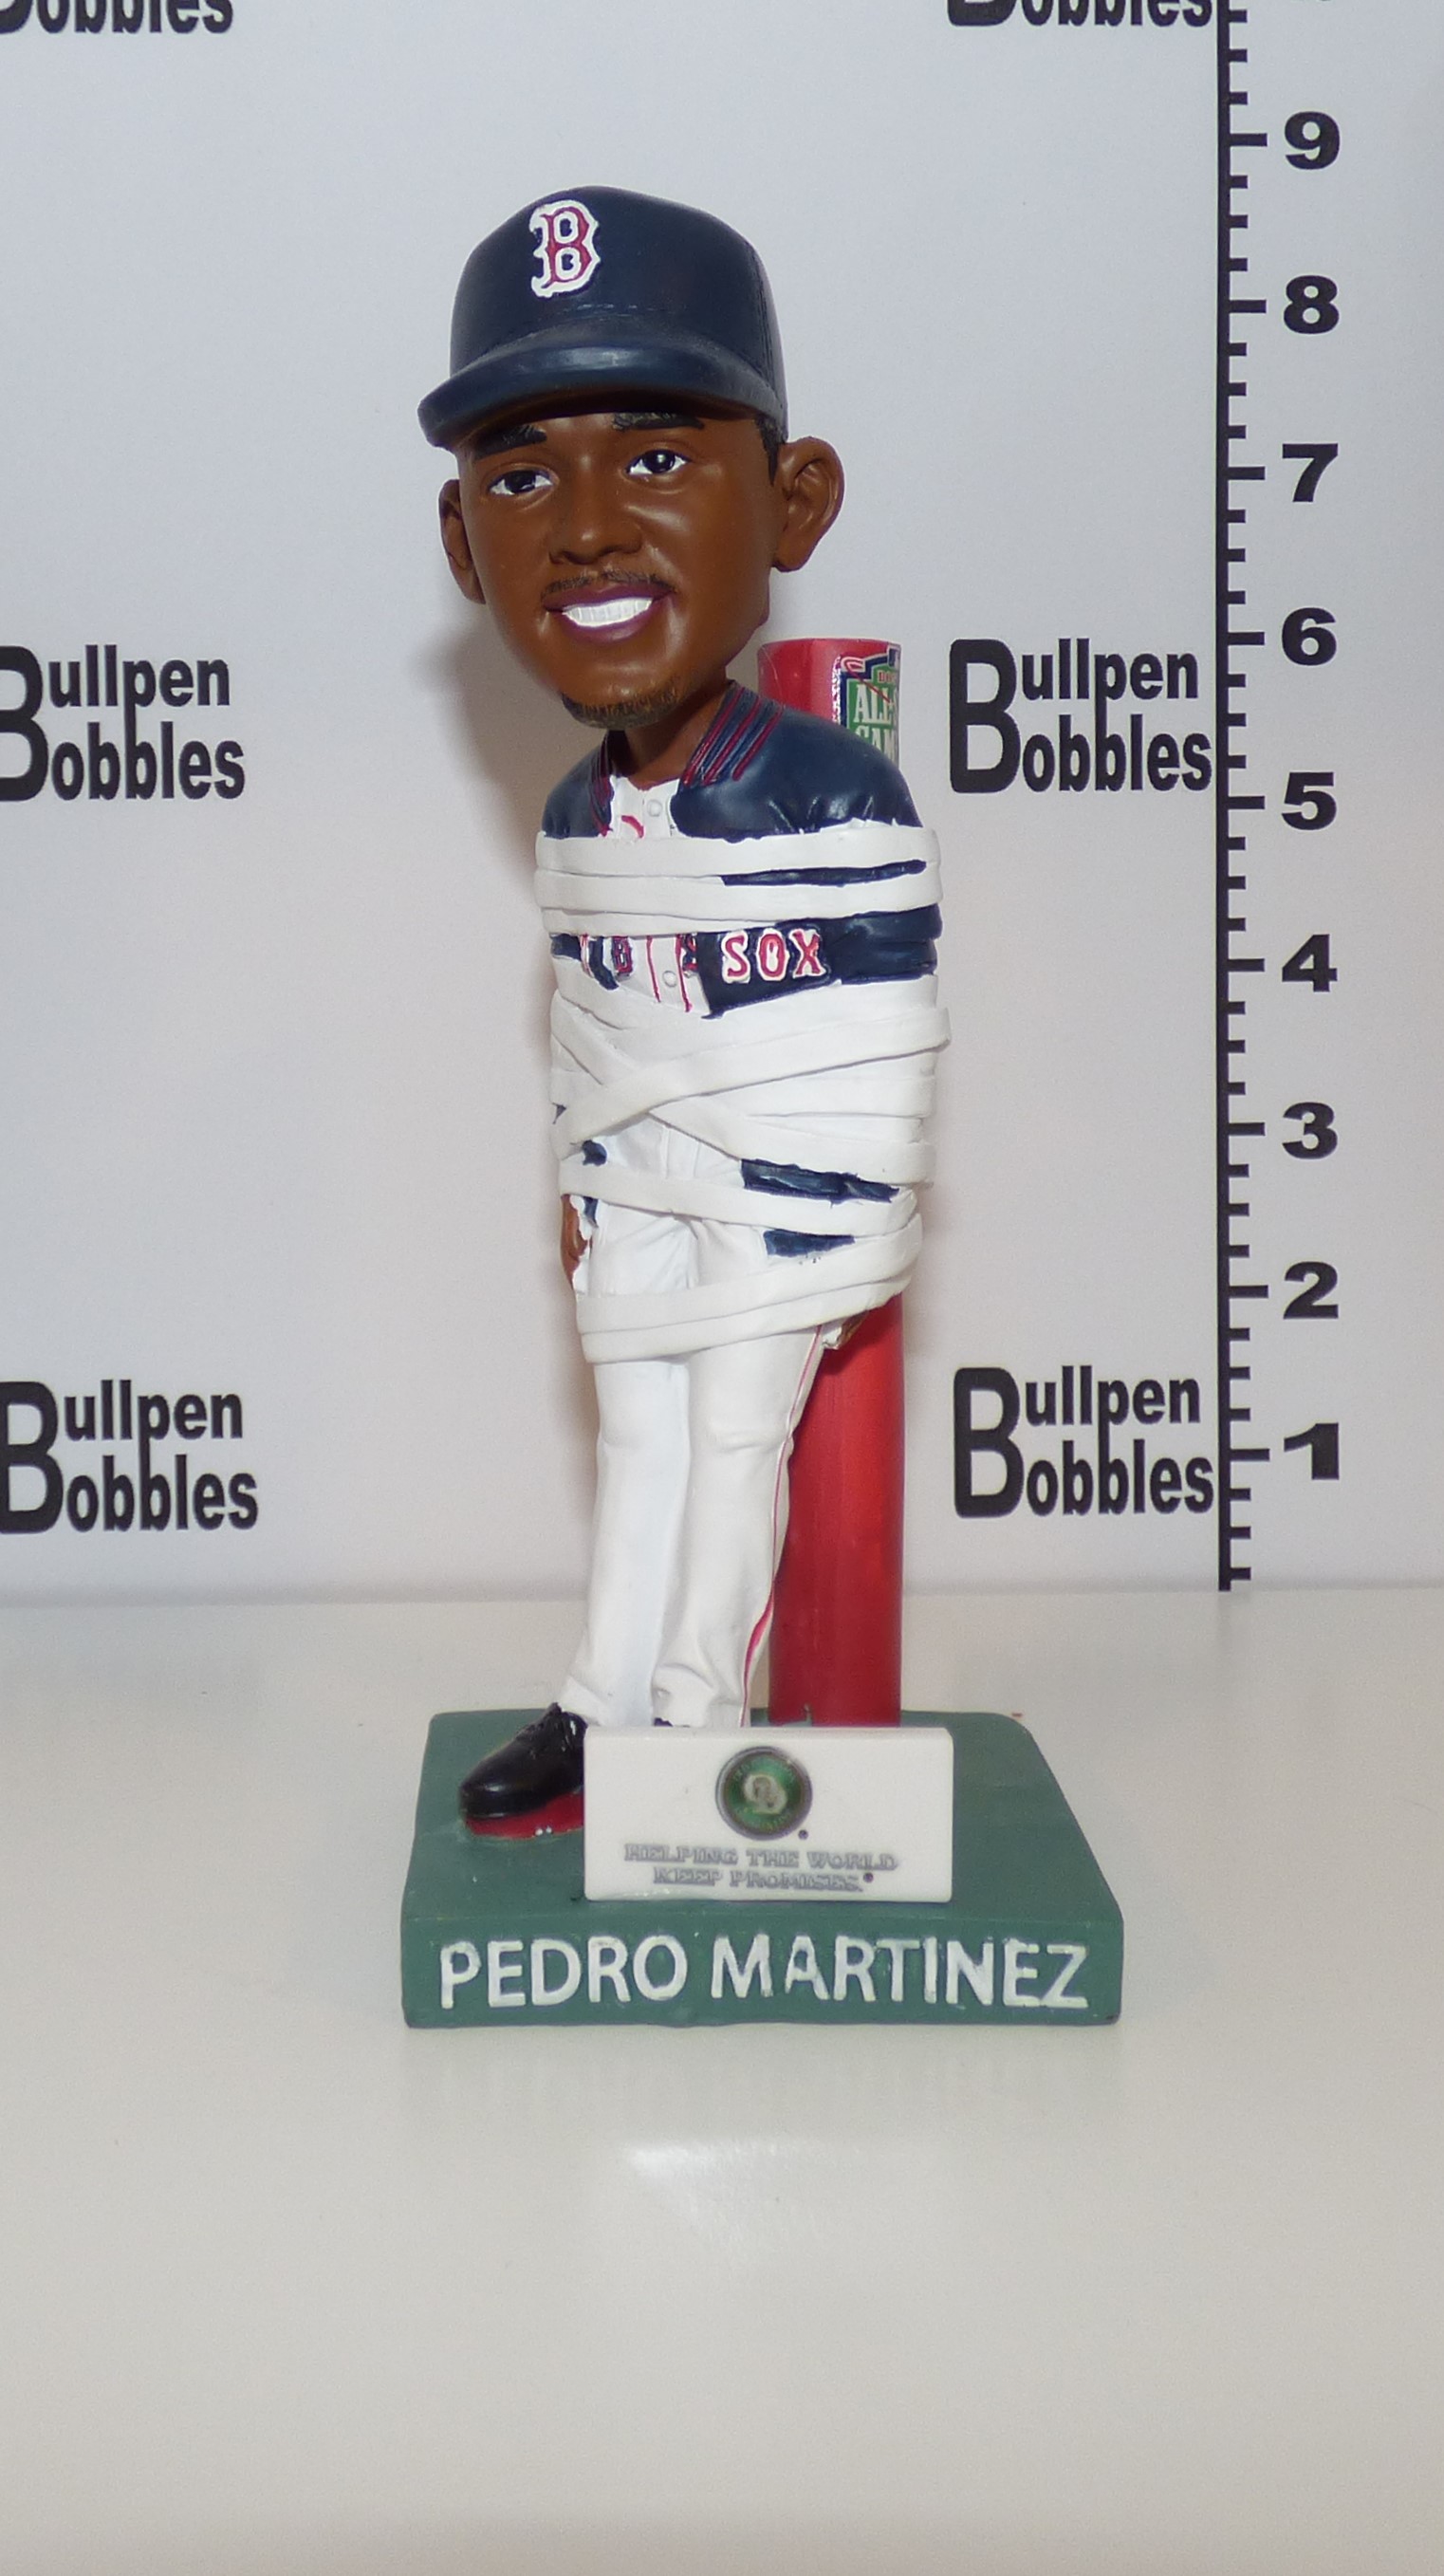 Pedro Martinez bobblehead